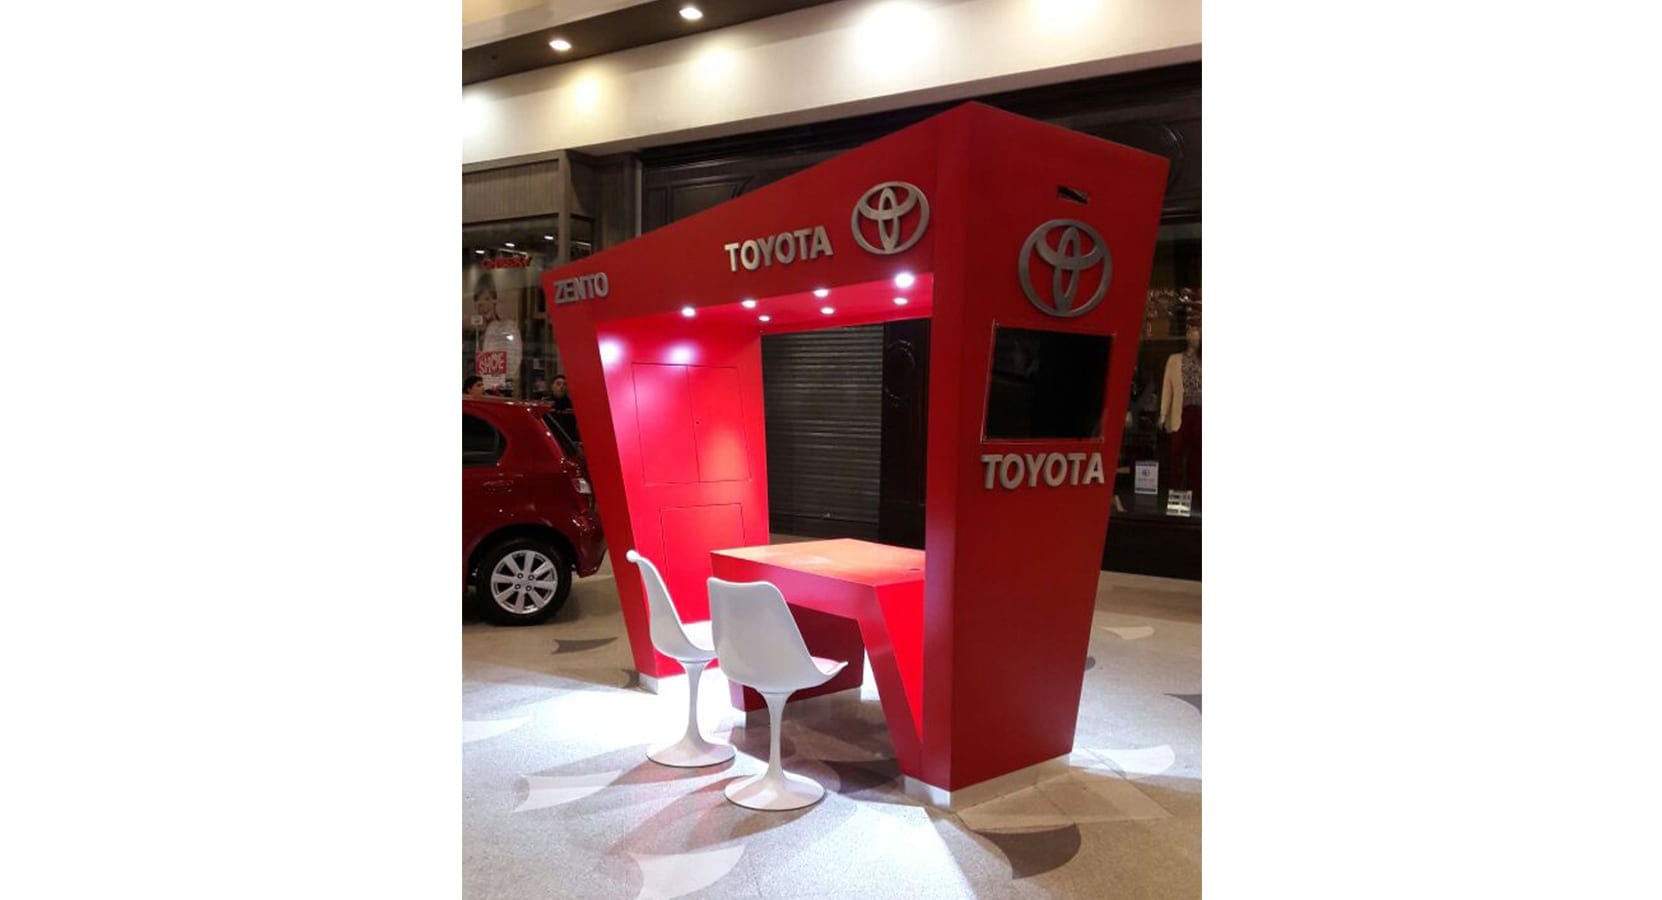 2017. Toyota Zento - Stand 8